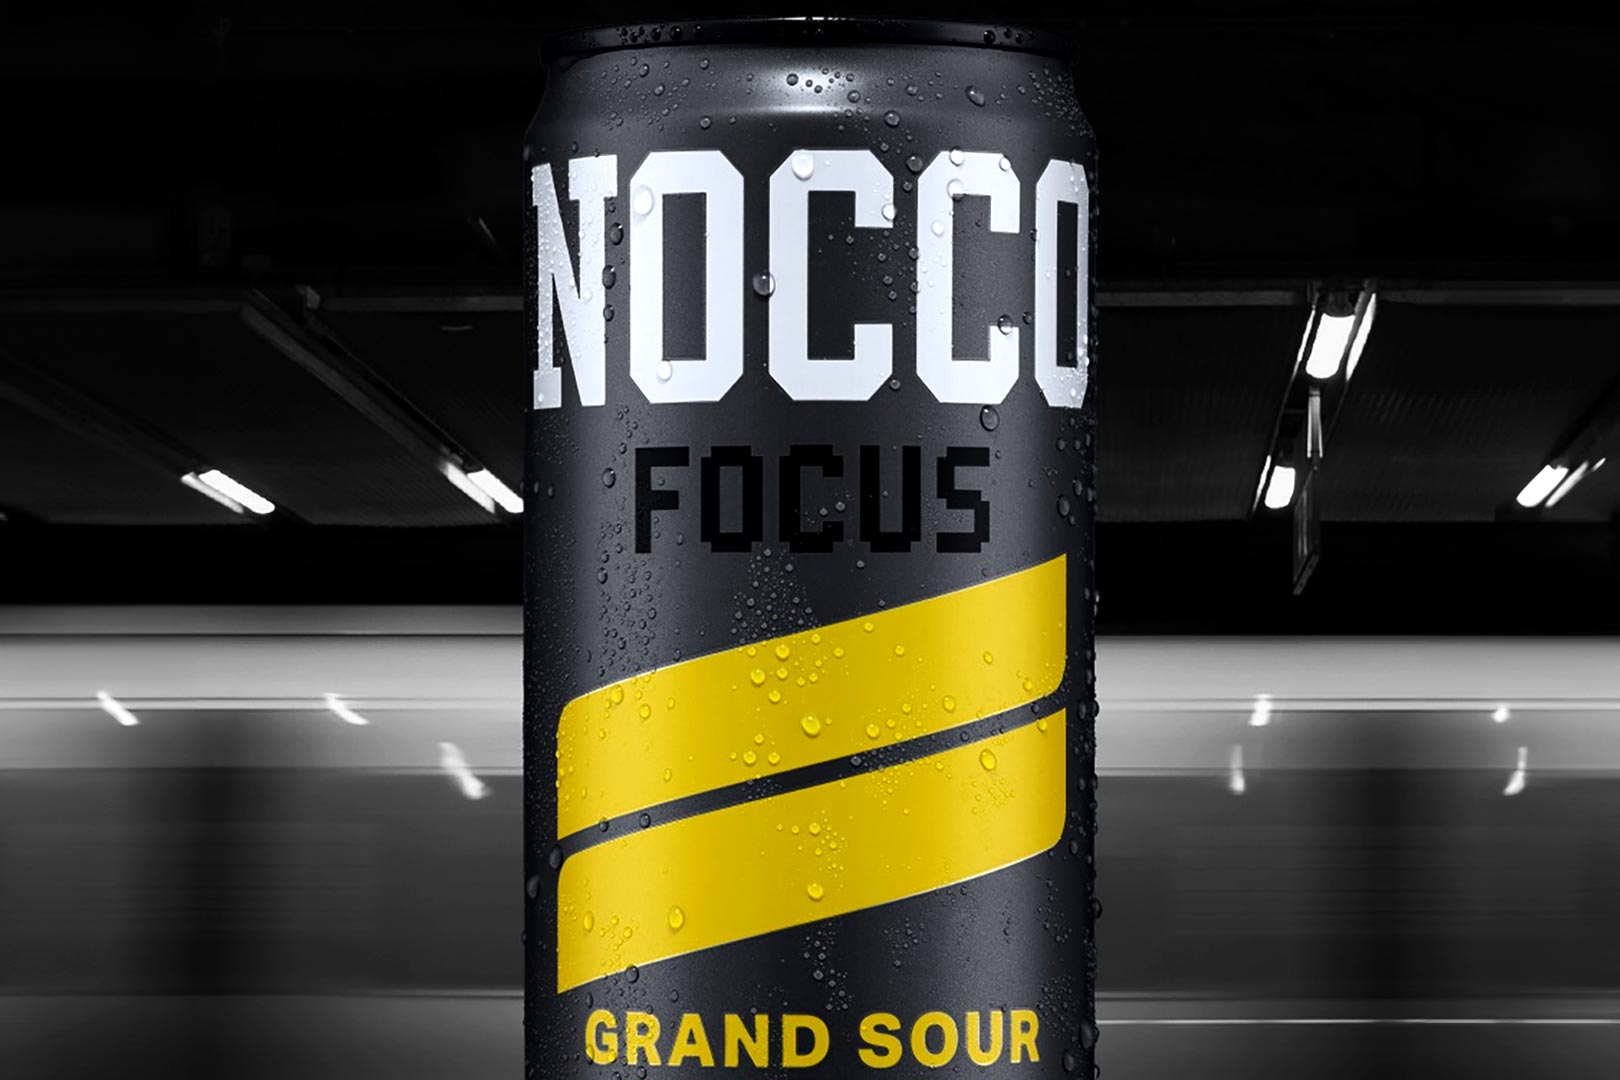 Grand Sour Nocco Focus